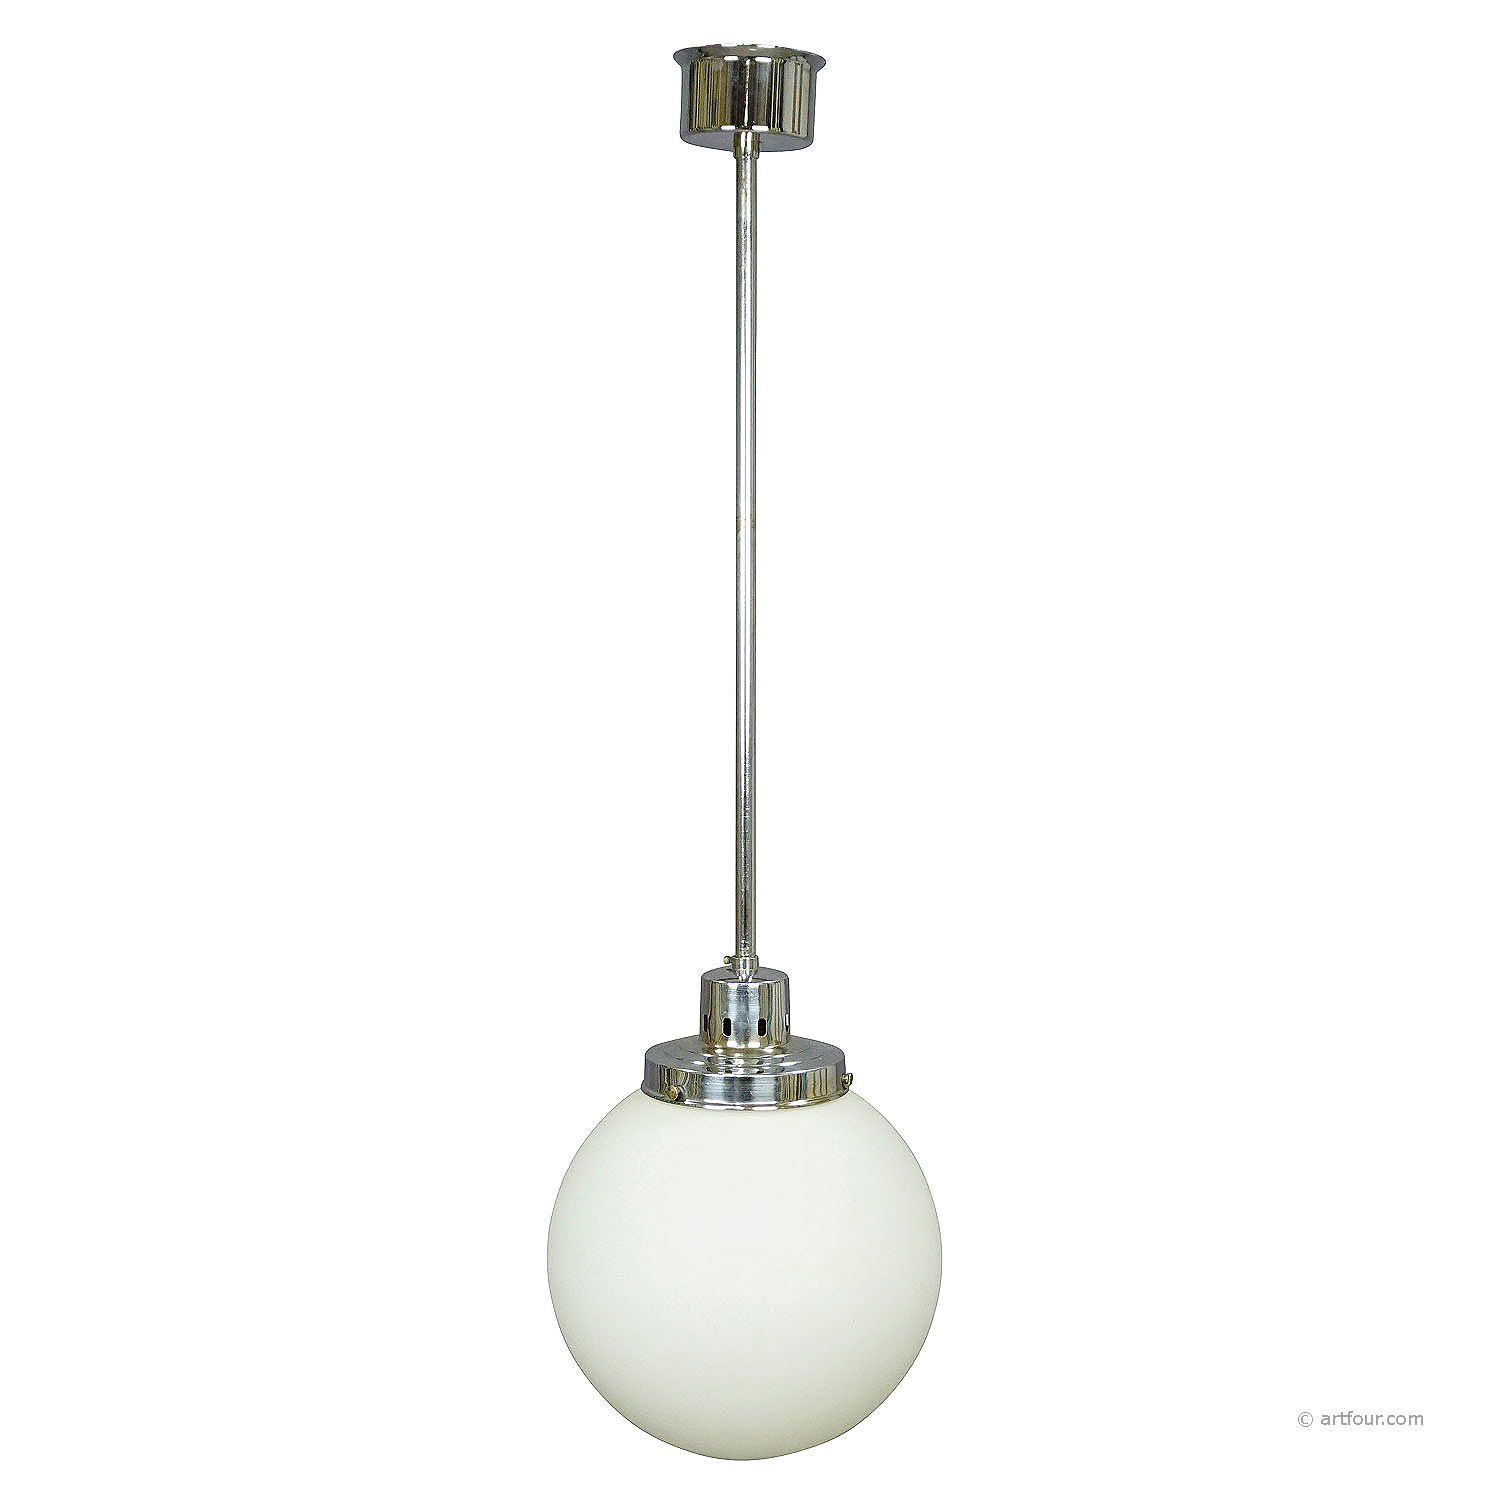 Antique Bauhaus Style Pendant Light with Opaline Glass Shade